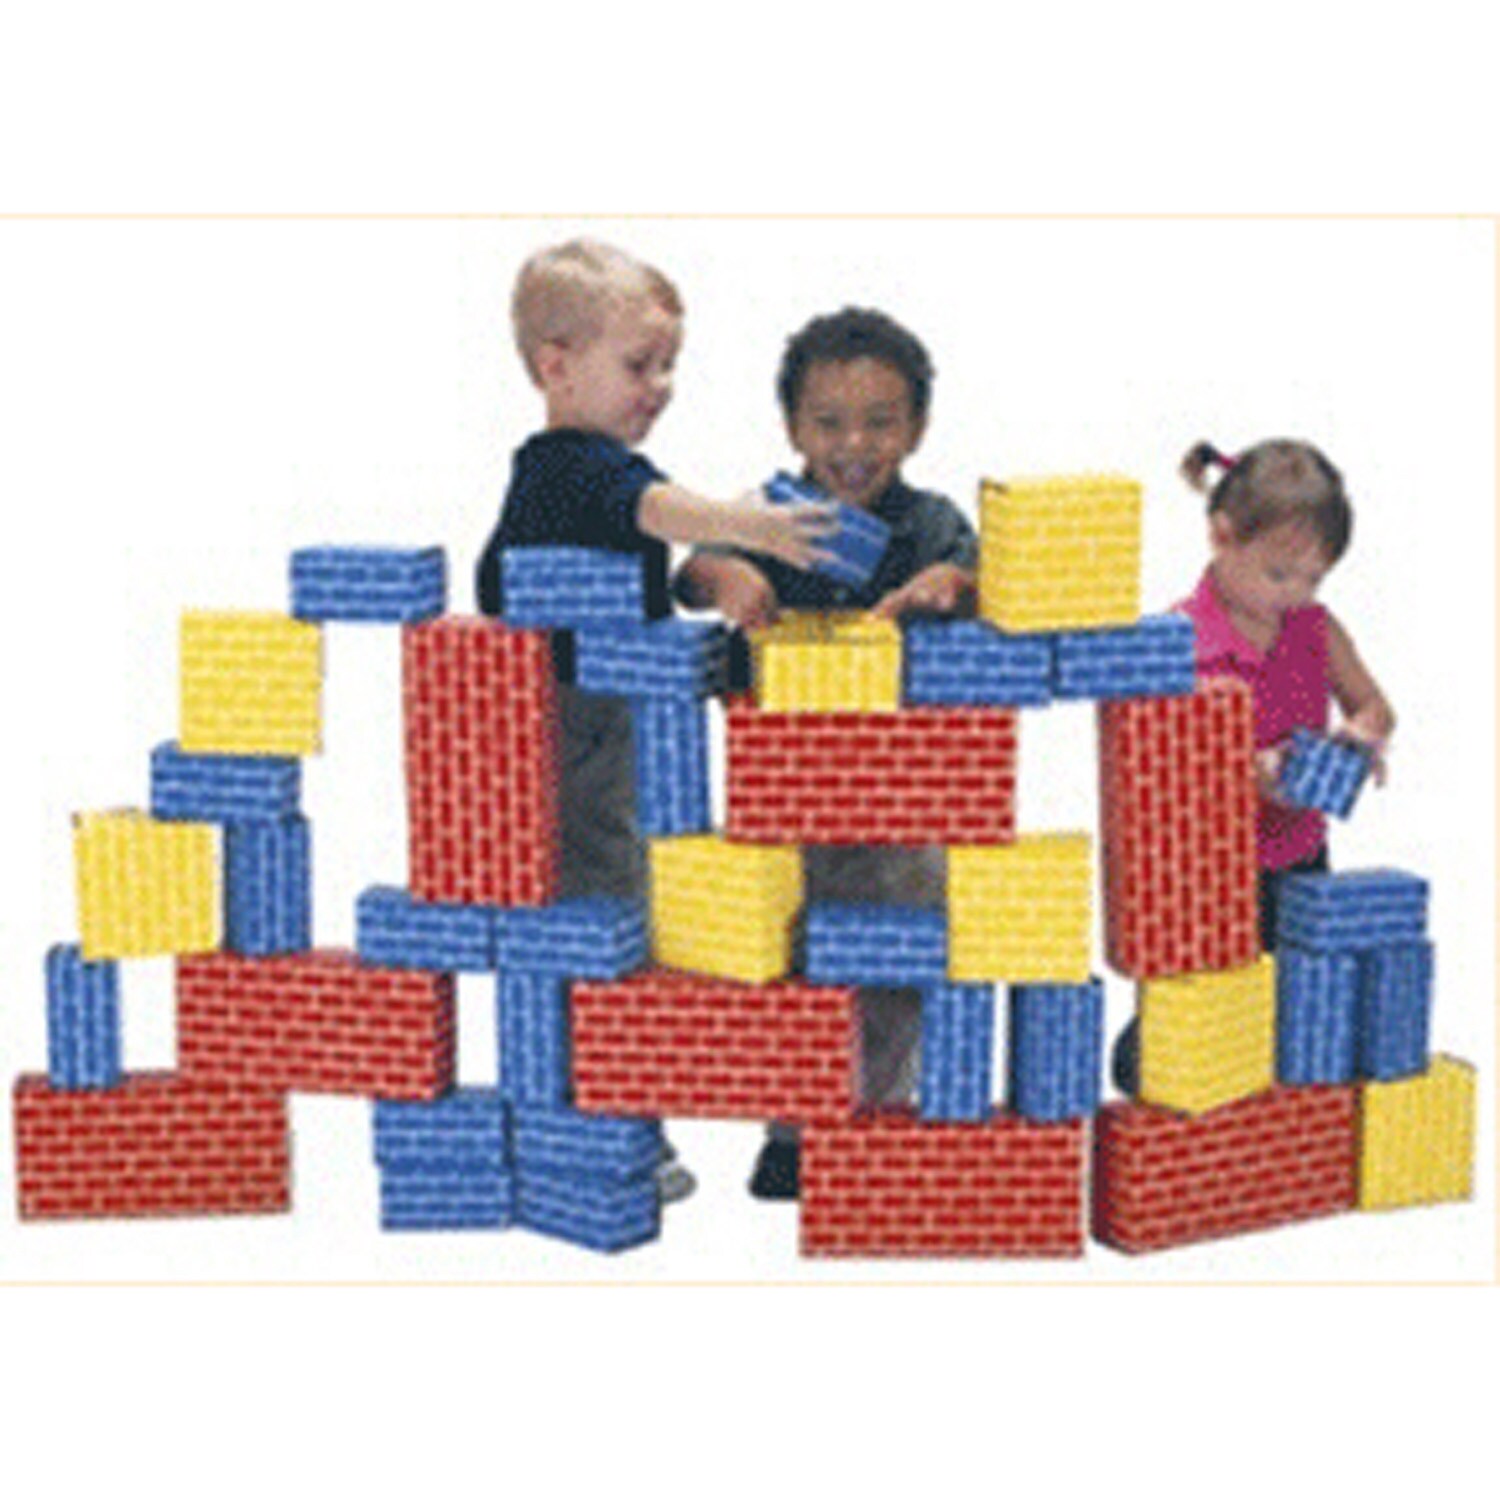 cardboard brick toys